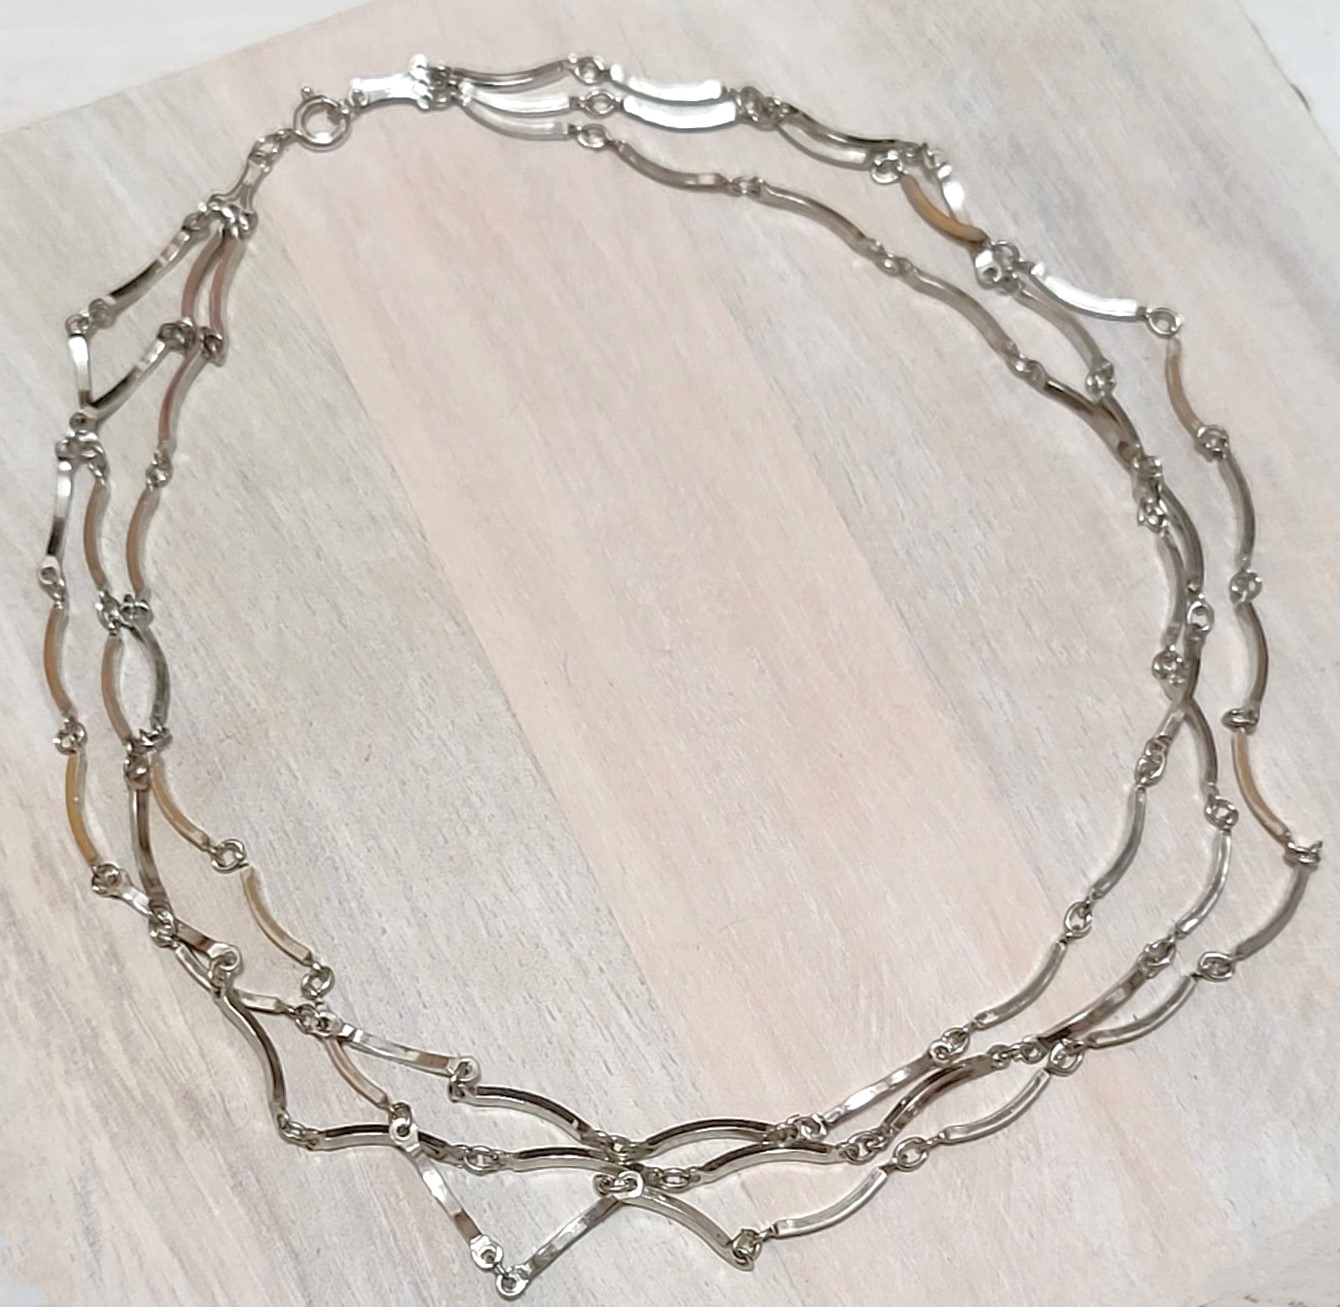 Vintage multi strand necklace, curved link in silver metal